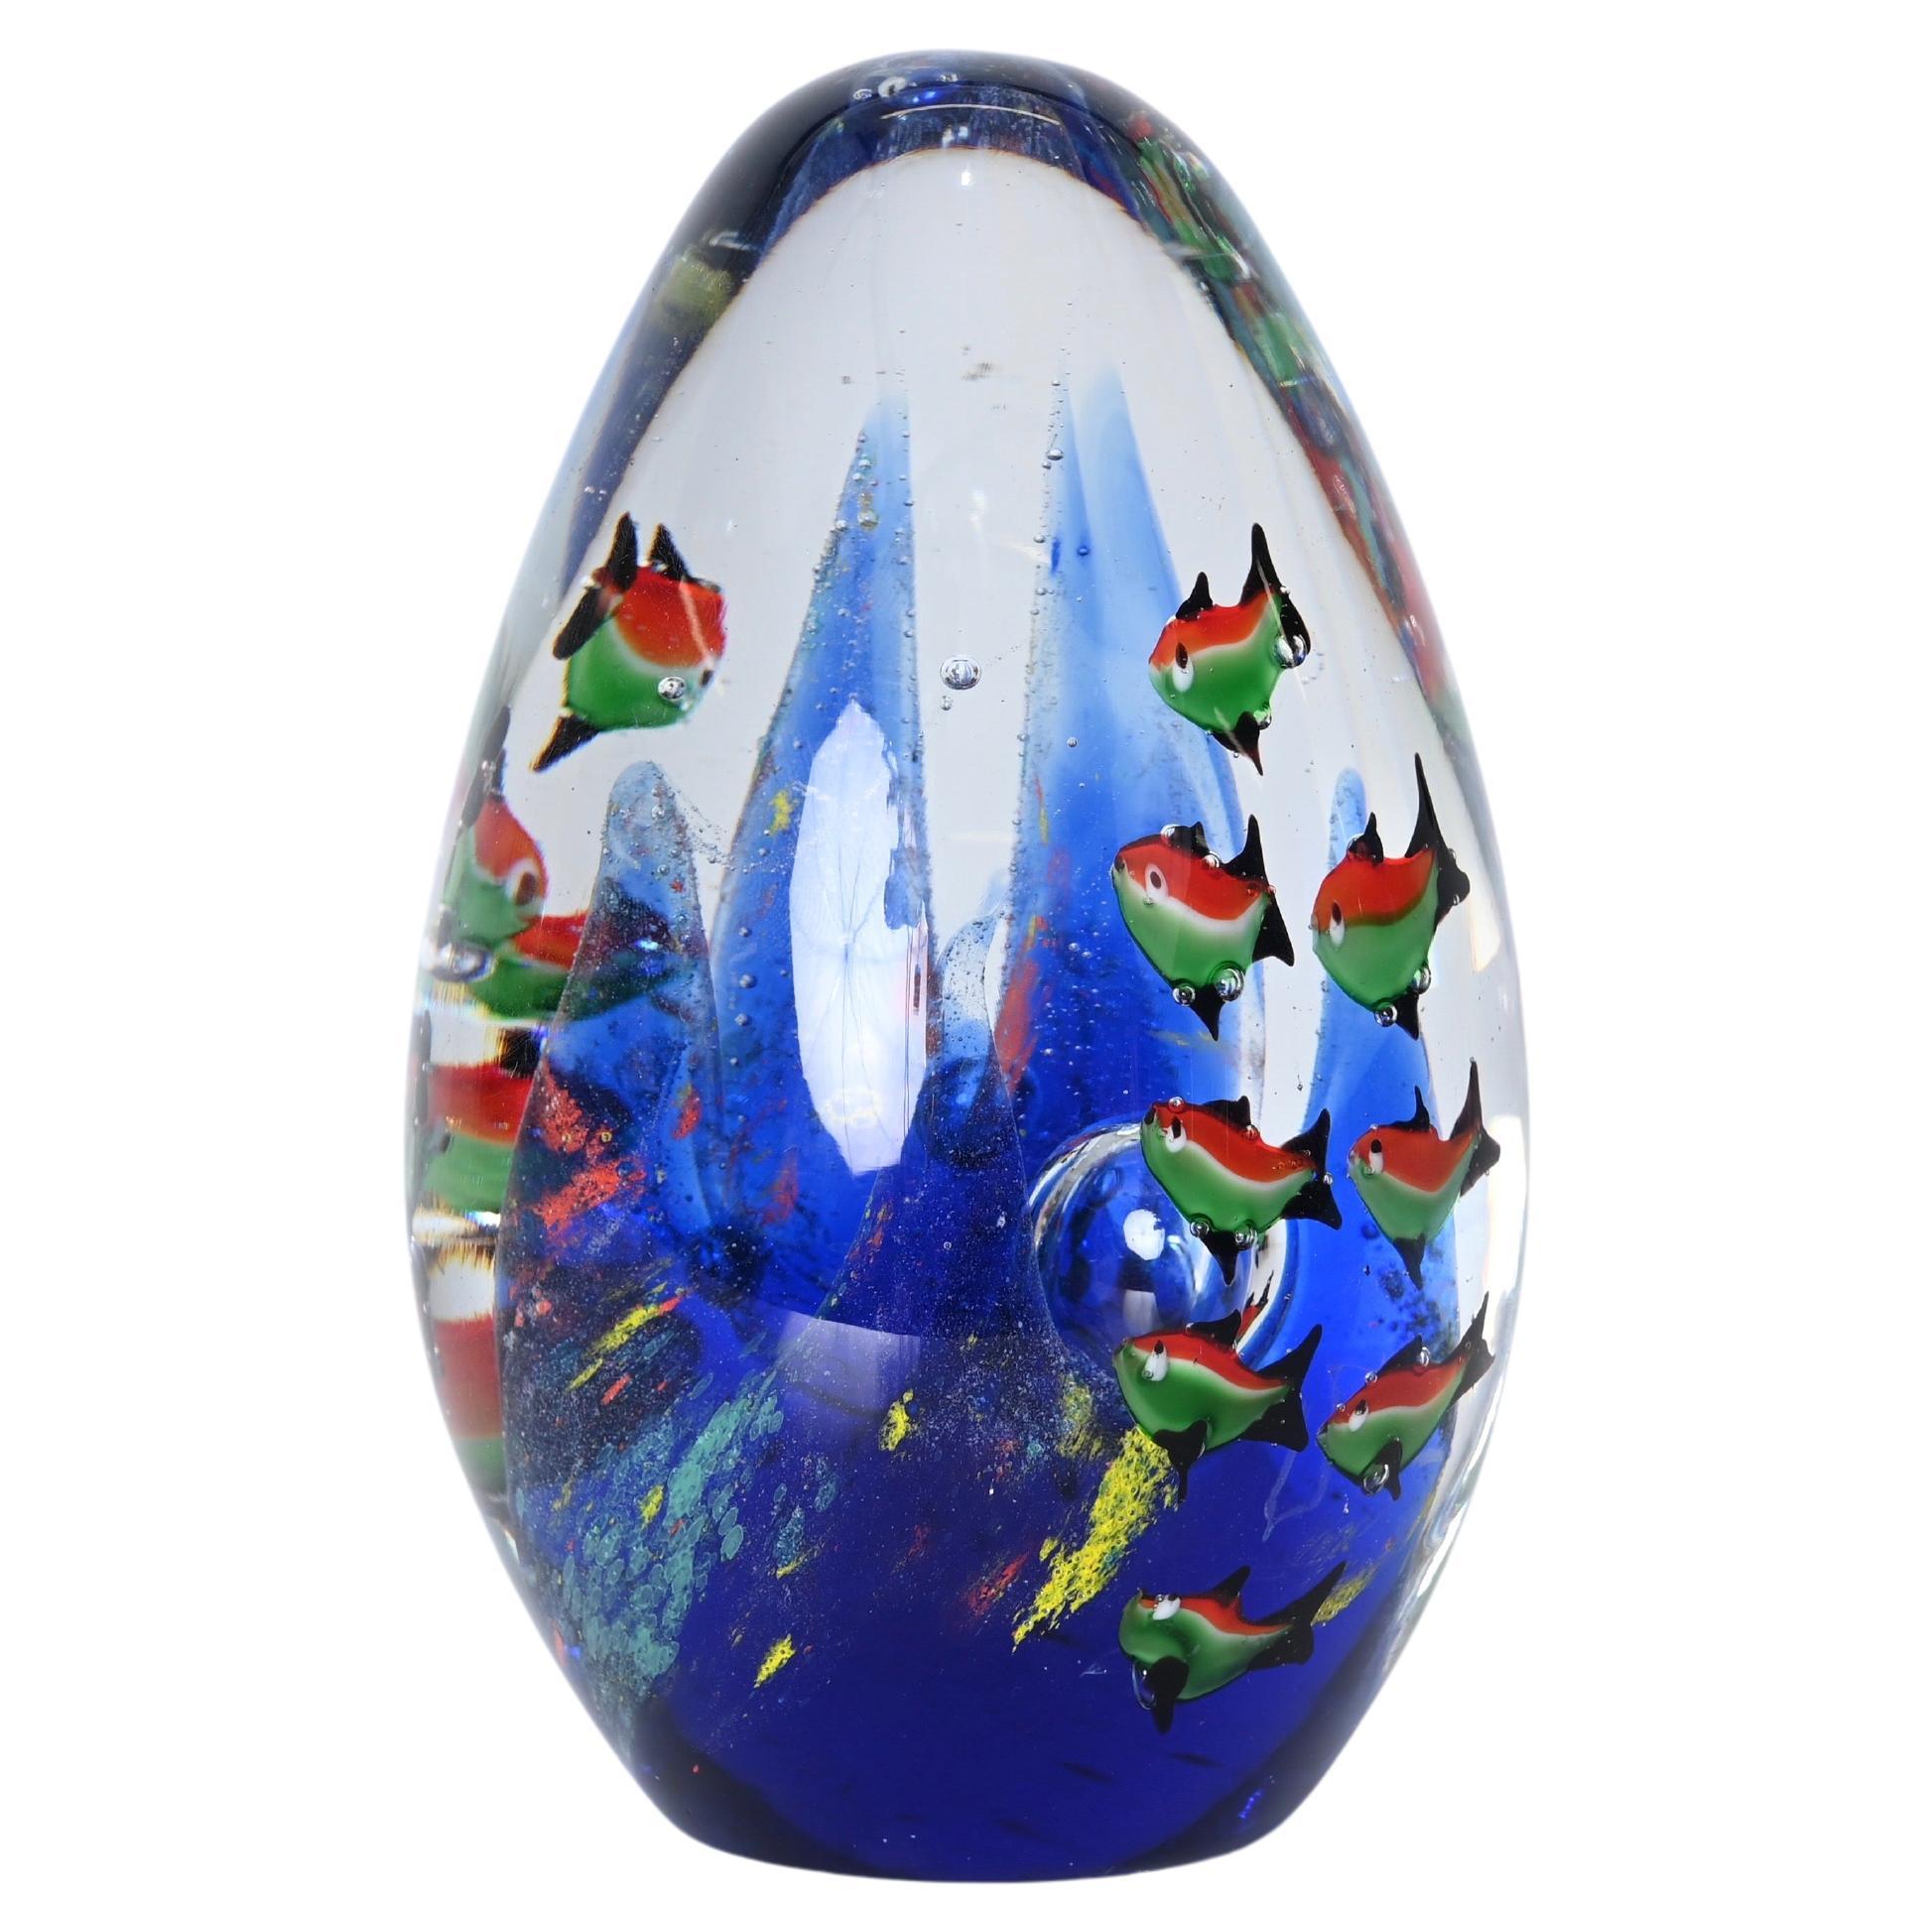 Cenedese Artistic Handmade Egg "Aquarium" Murano Glass Sculpture, Italy 1960s For Sale